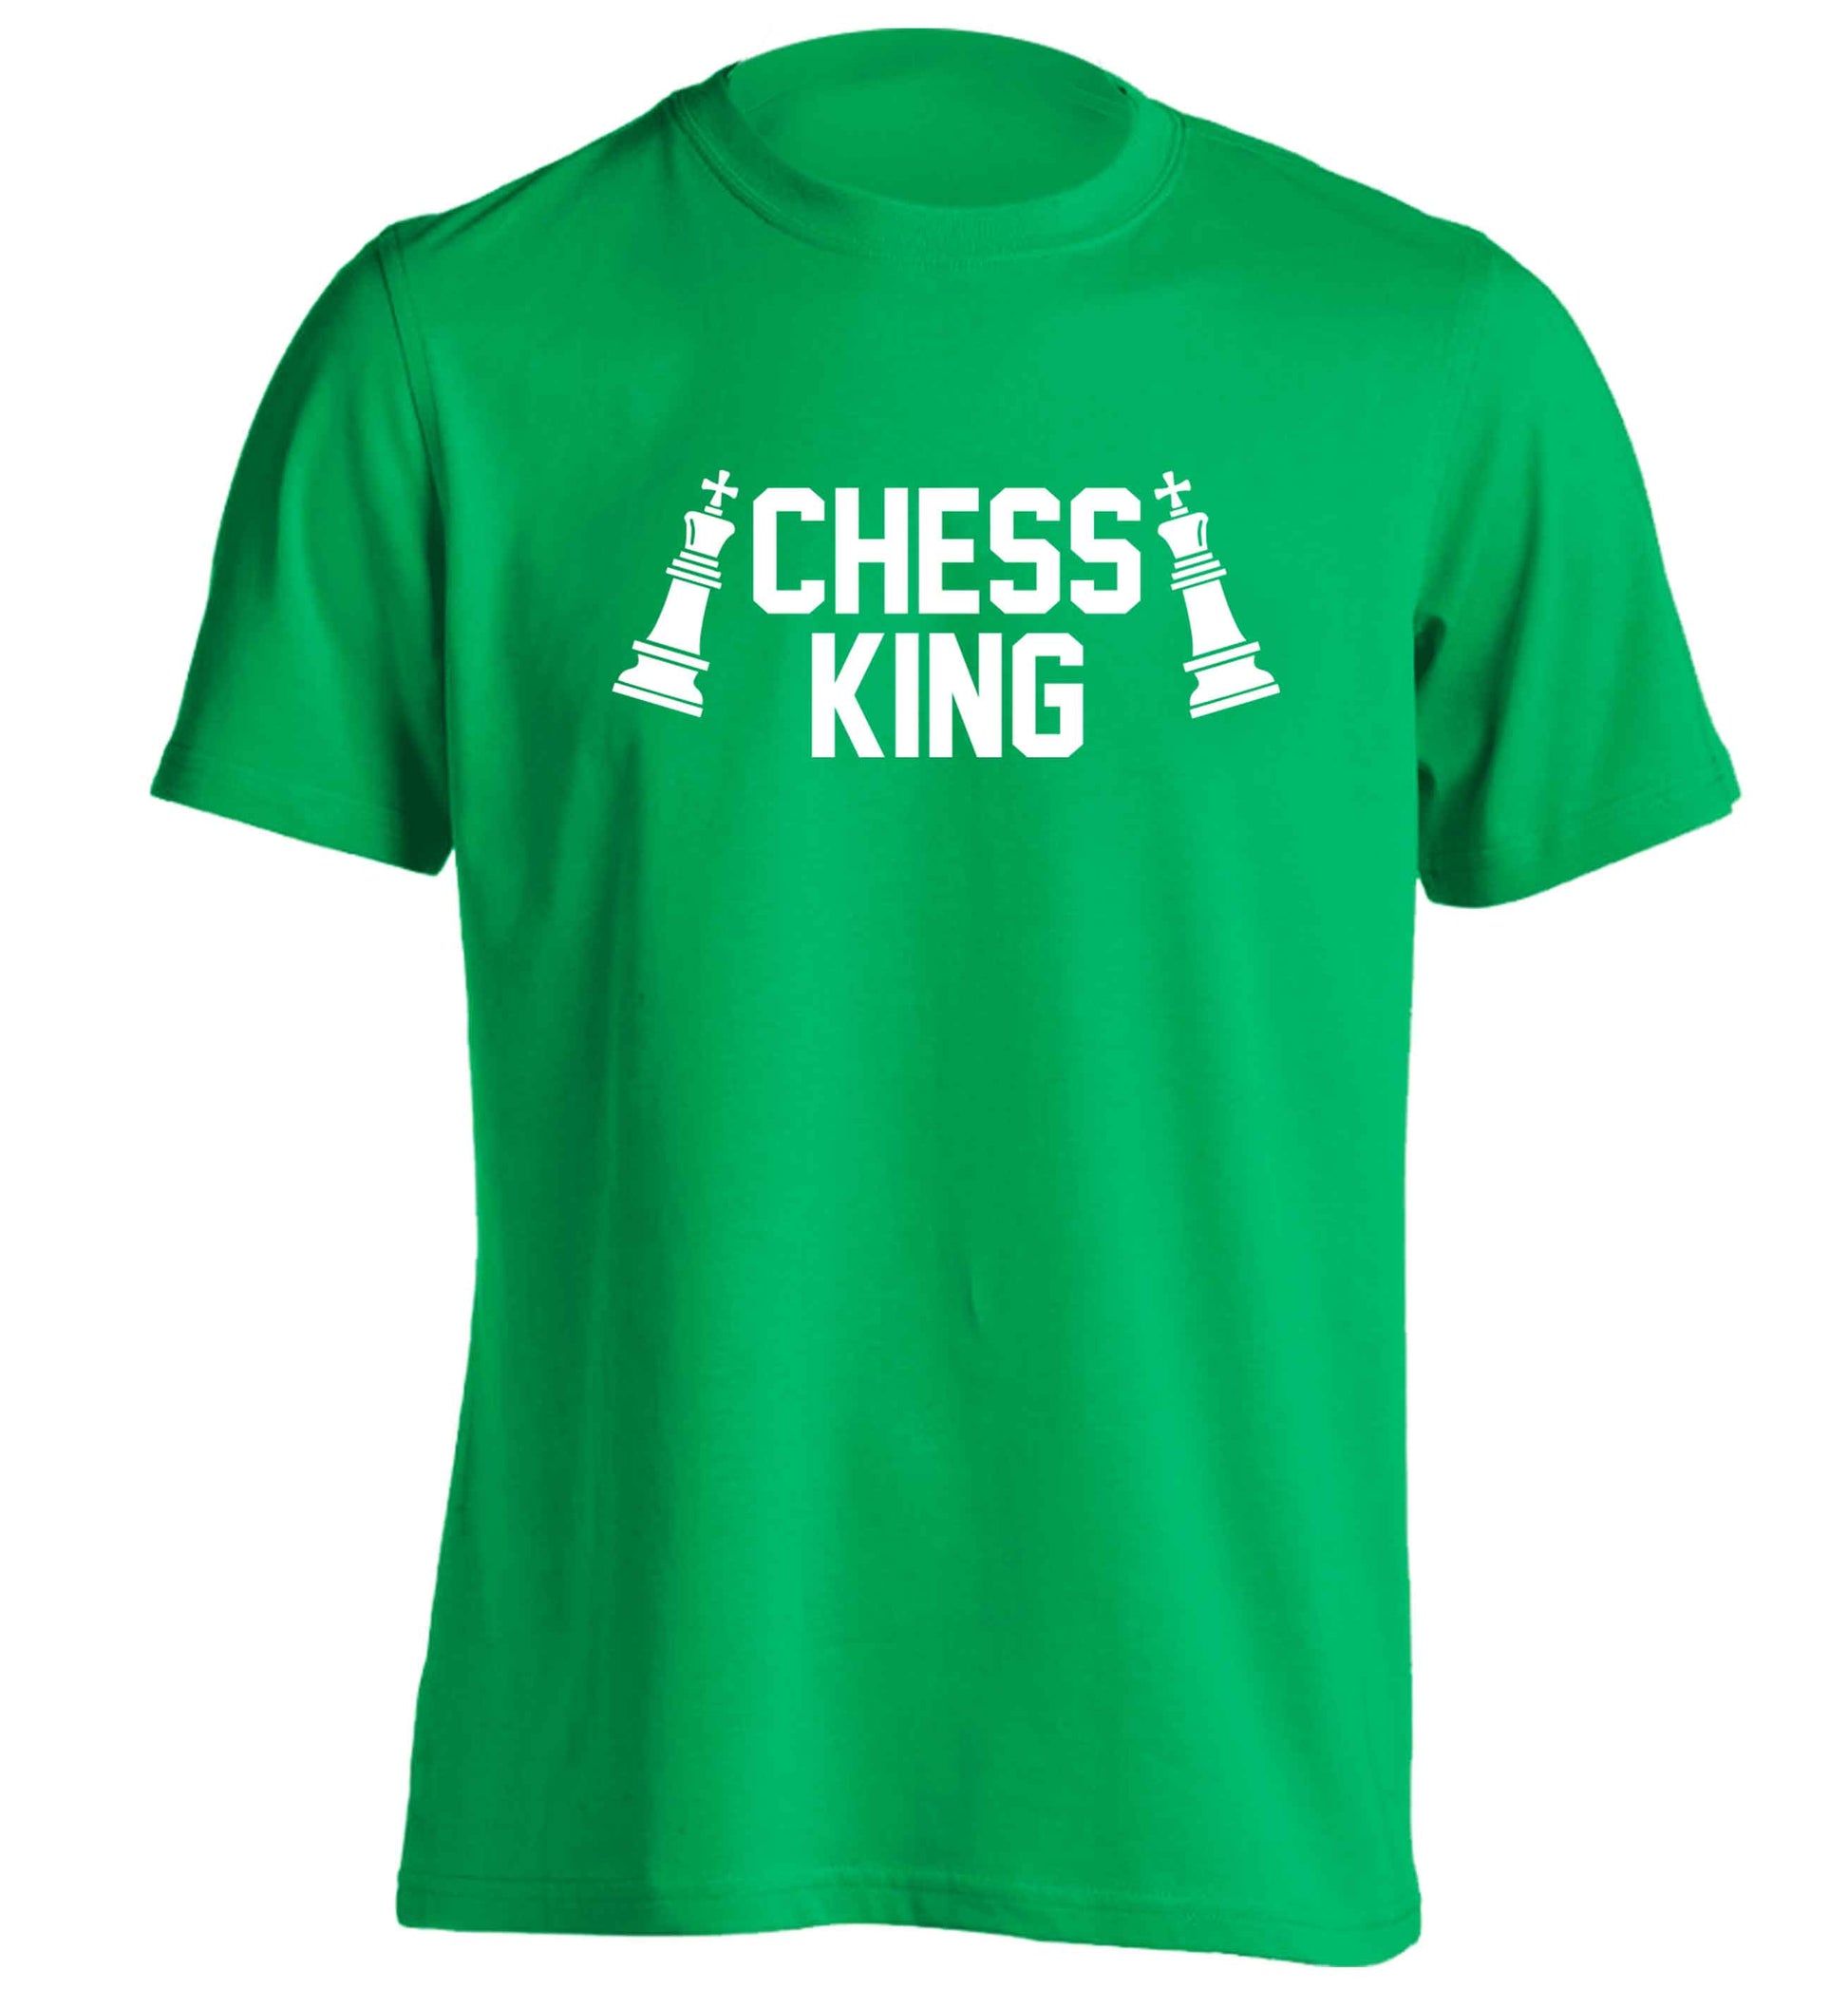 Chess king adults unisex green Tshirt 2XL